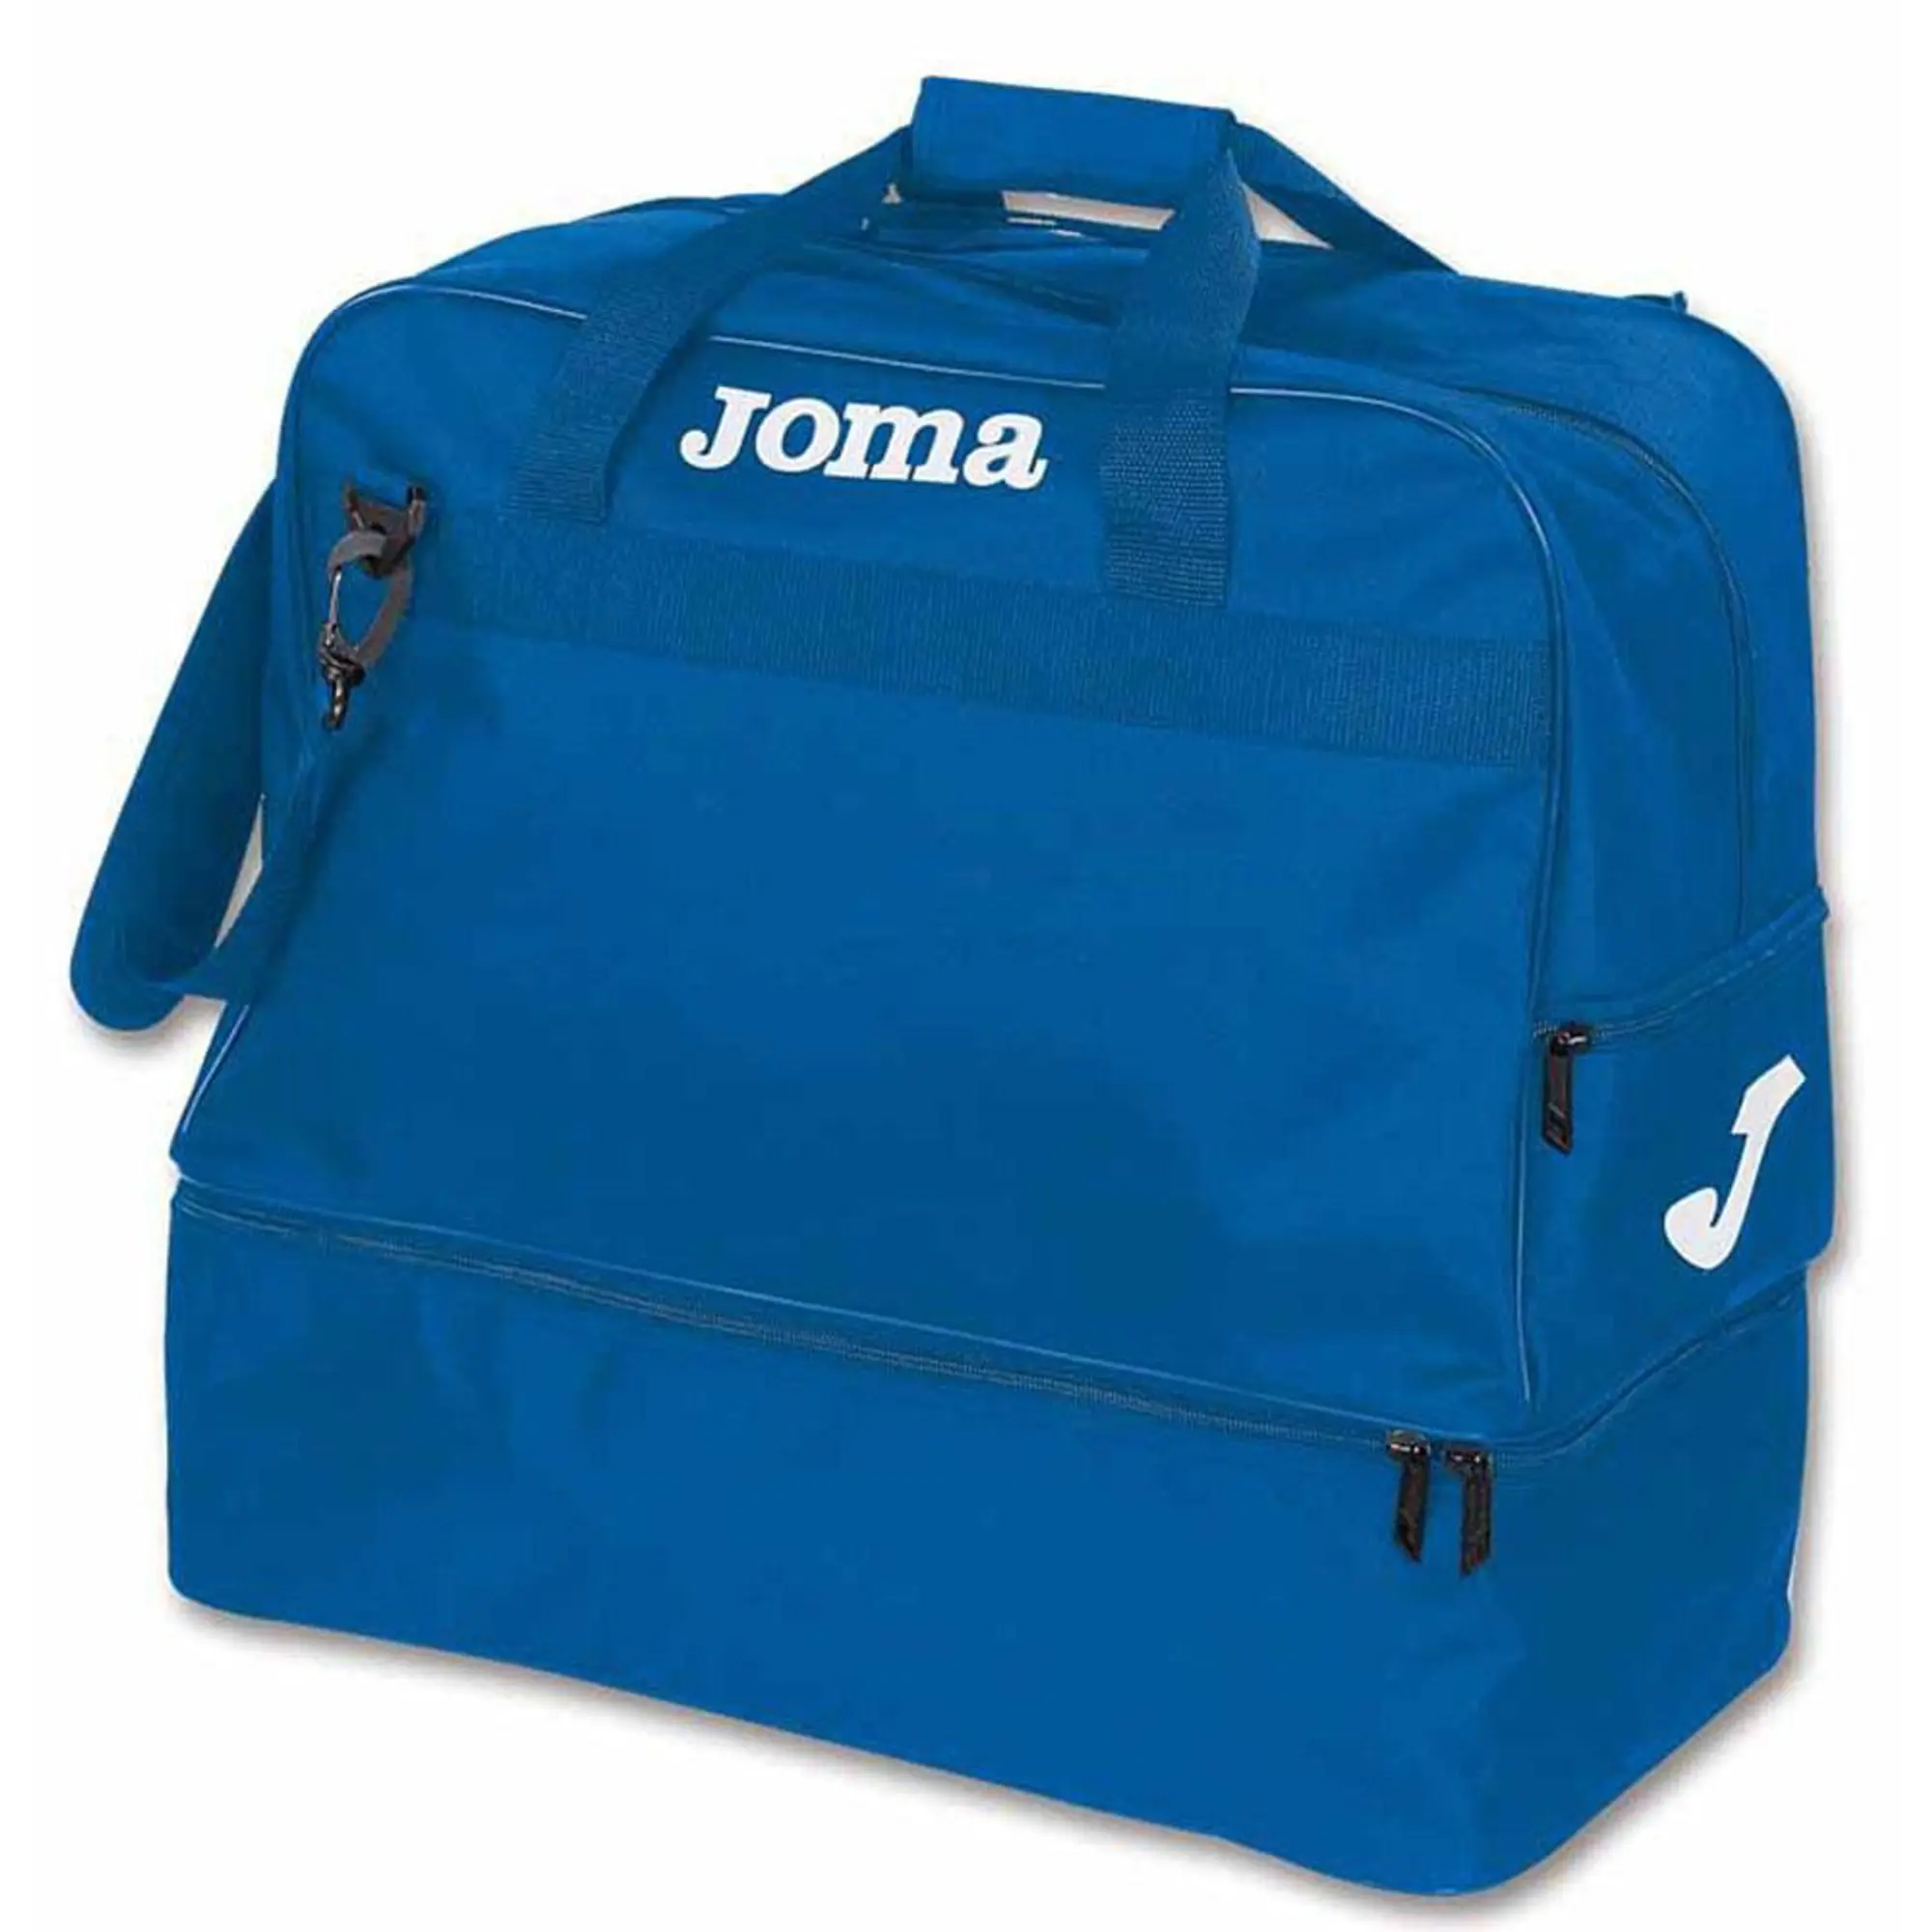 Joma Training Iii L Bag  - Blue